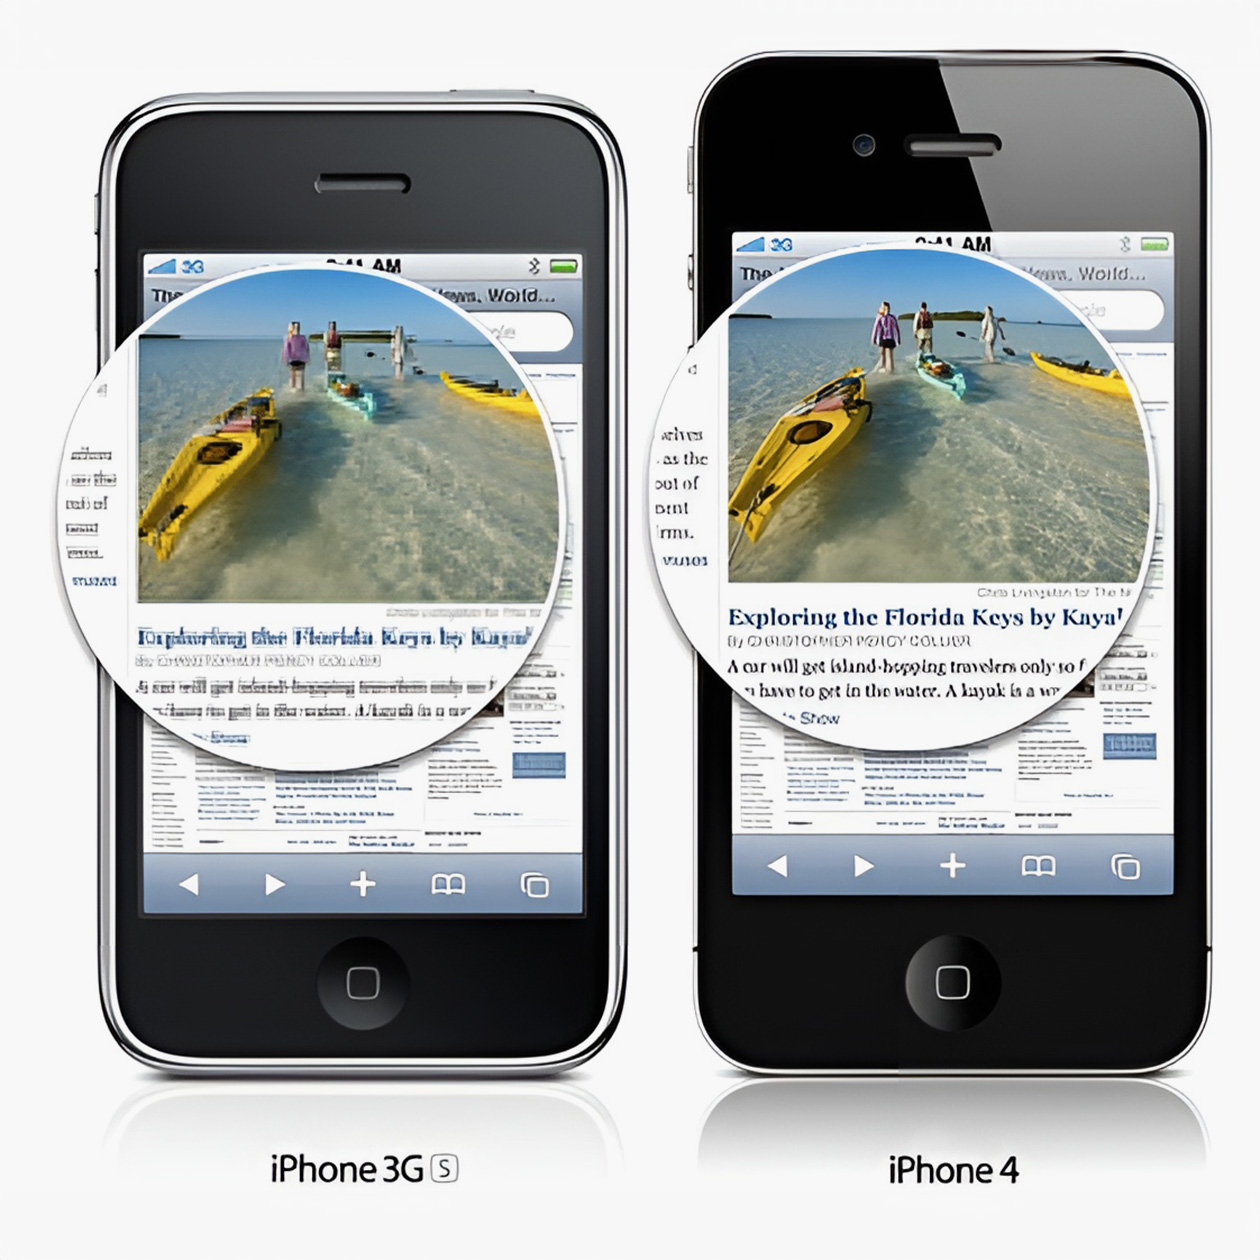 Слева — экран iPhone 3Gs без Retina c четкостью 165 ppi, справа — iPhone 4 с Retina-экраном с 330 ppi. Источник: bigmedium.com